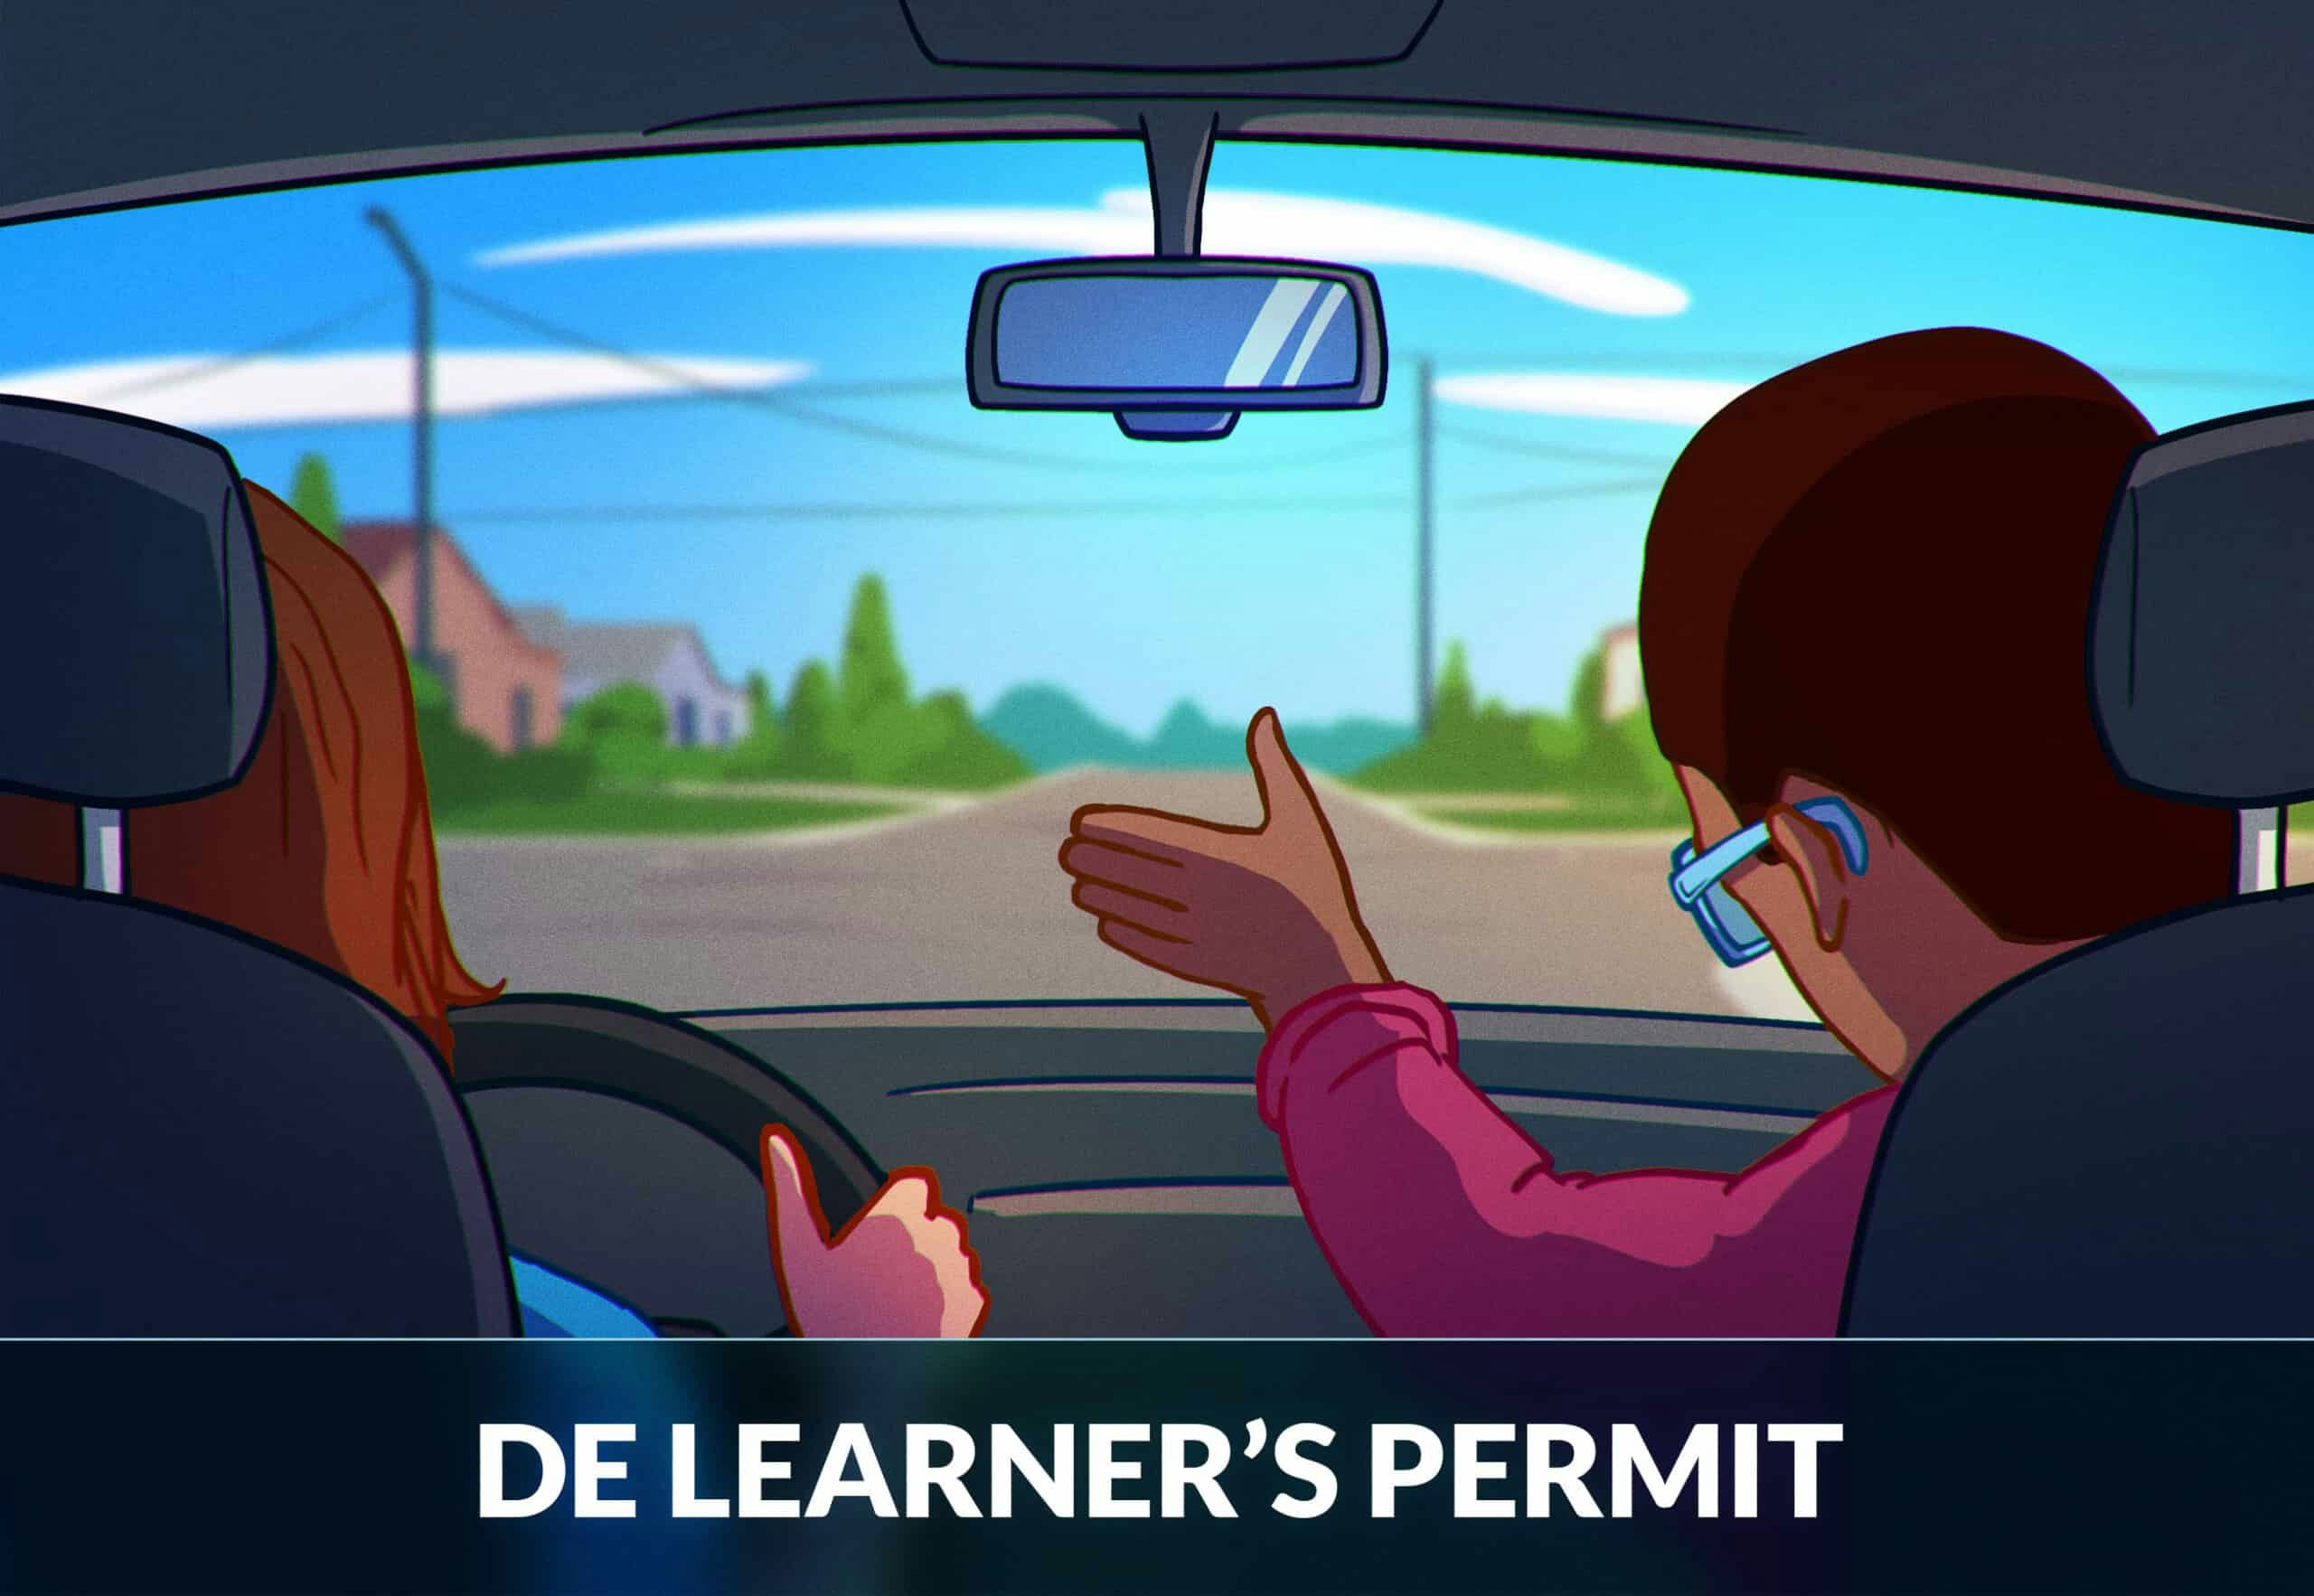 Delaware (DE) Learner's Permit